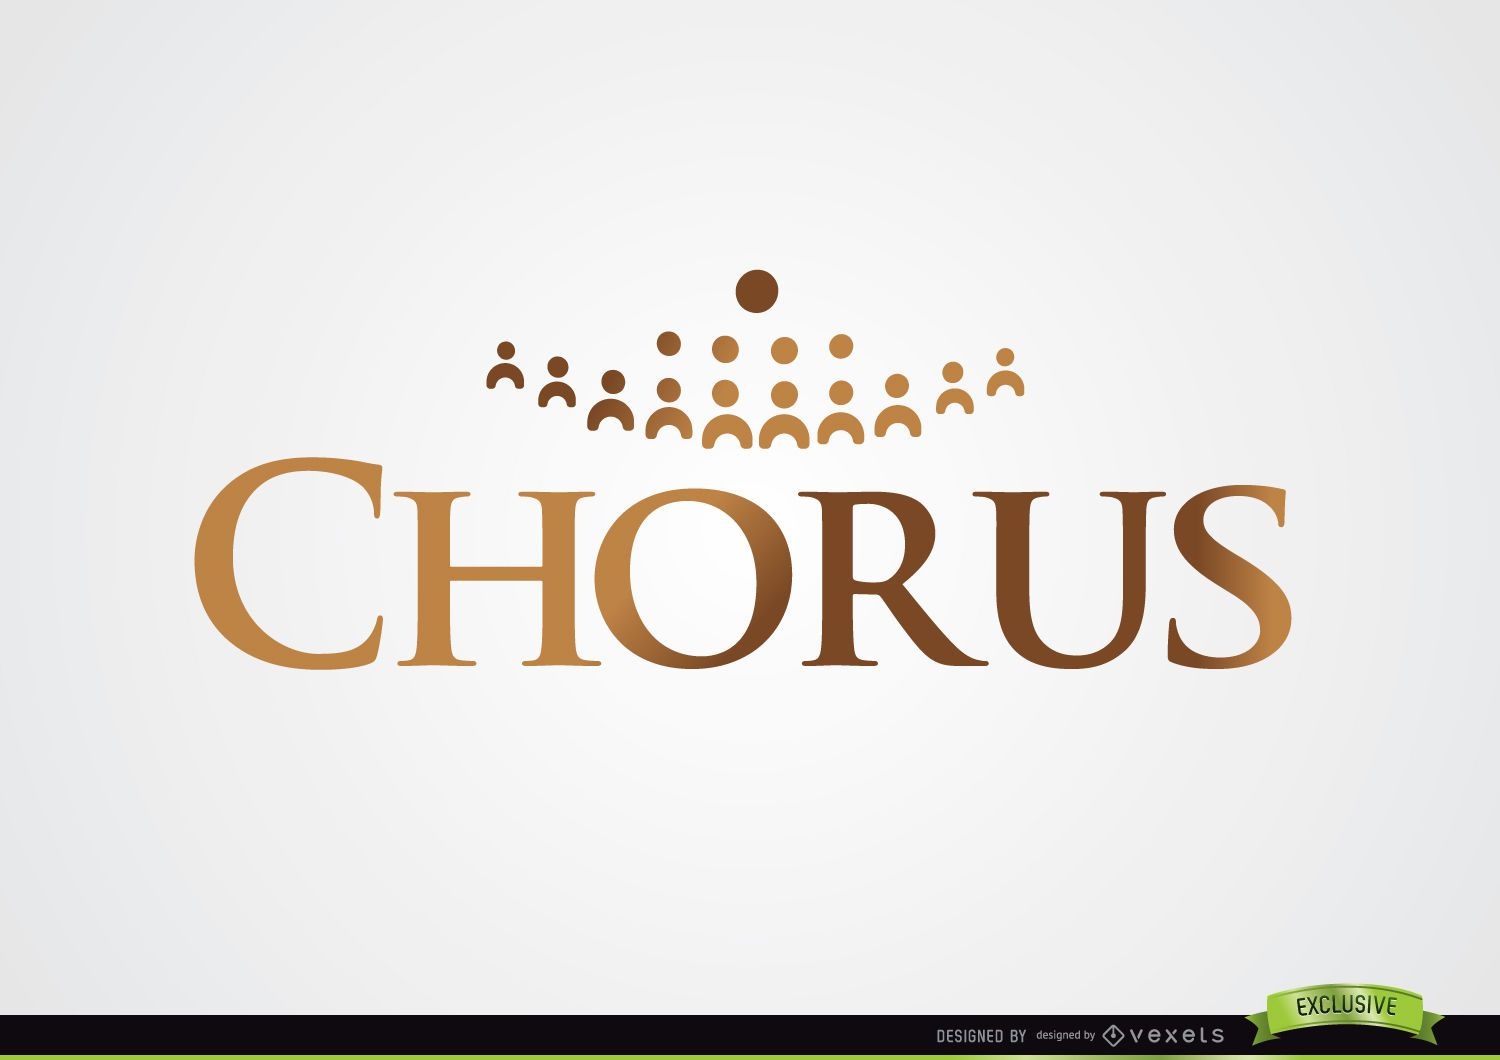 Chorus-Logo mit Silhouetten